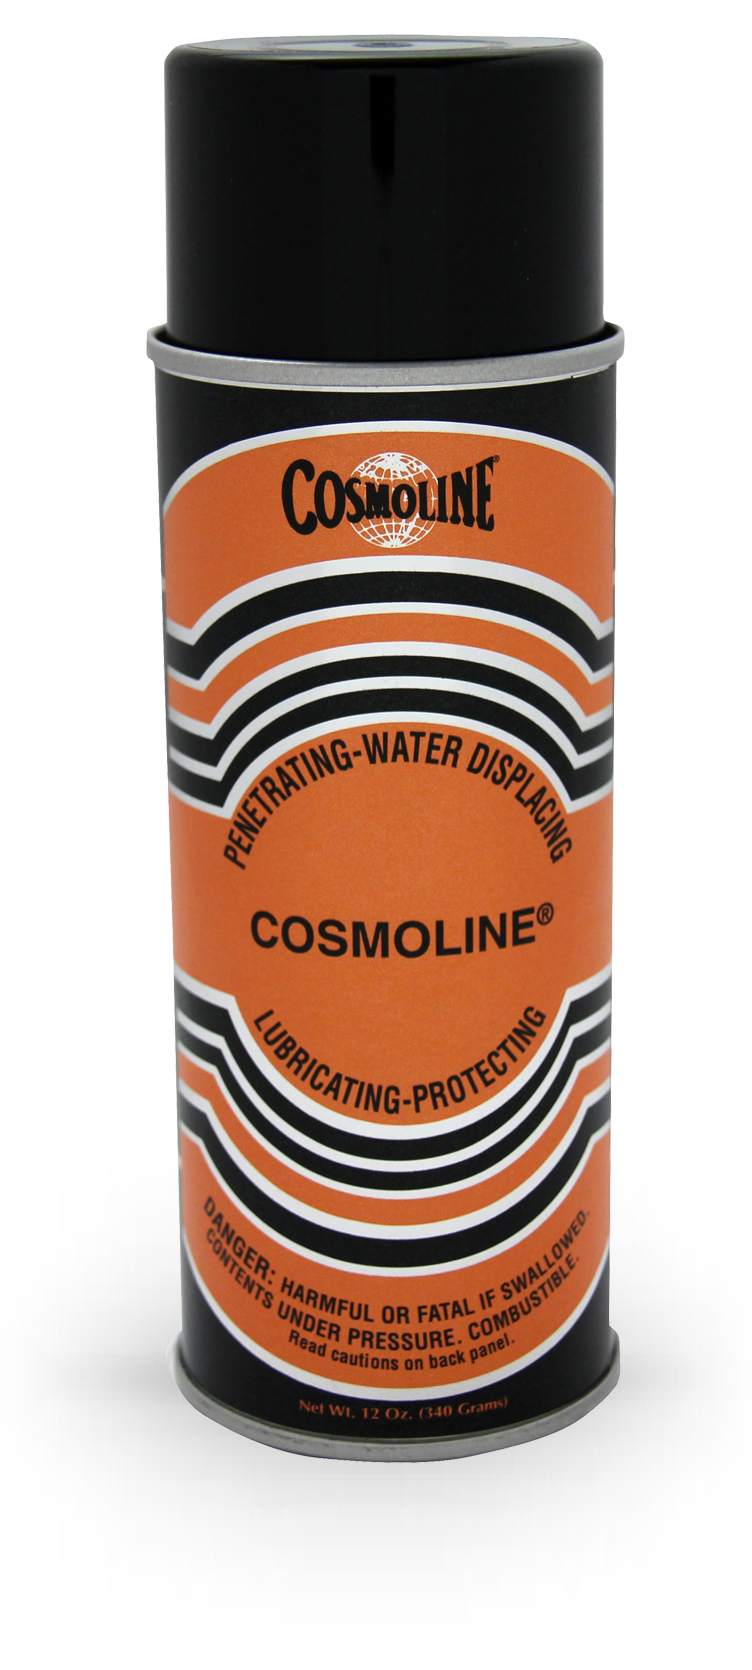 Cosmoline Aerosol Multi-Use Maintenance Spray